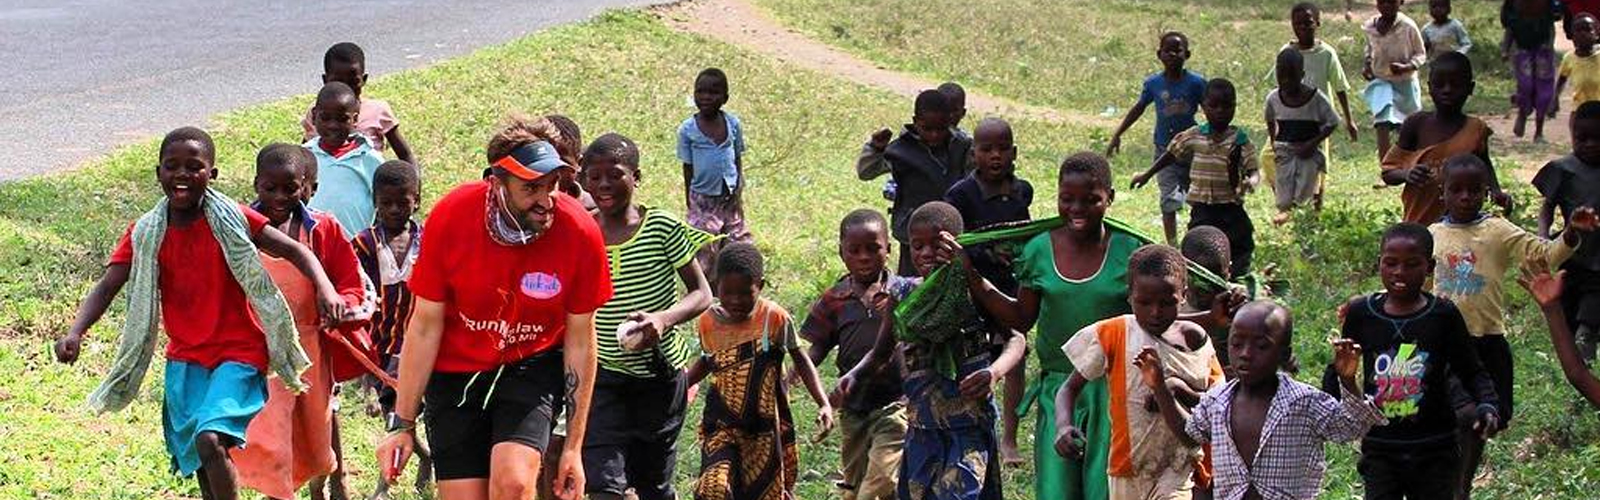 Image: Brendan running accompanied by children